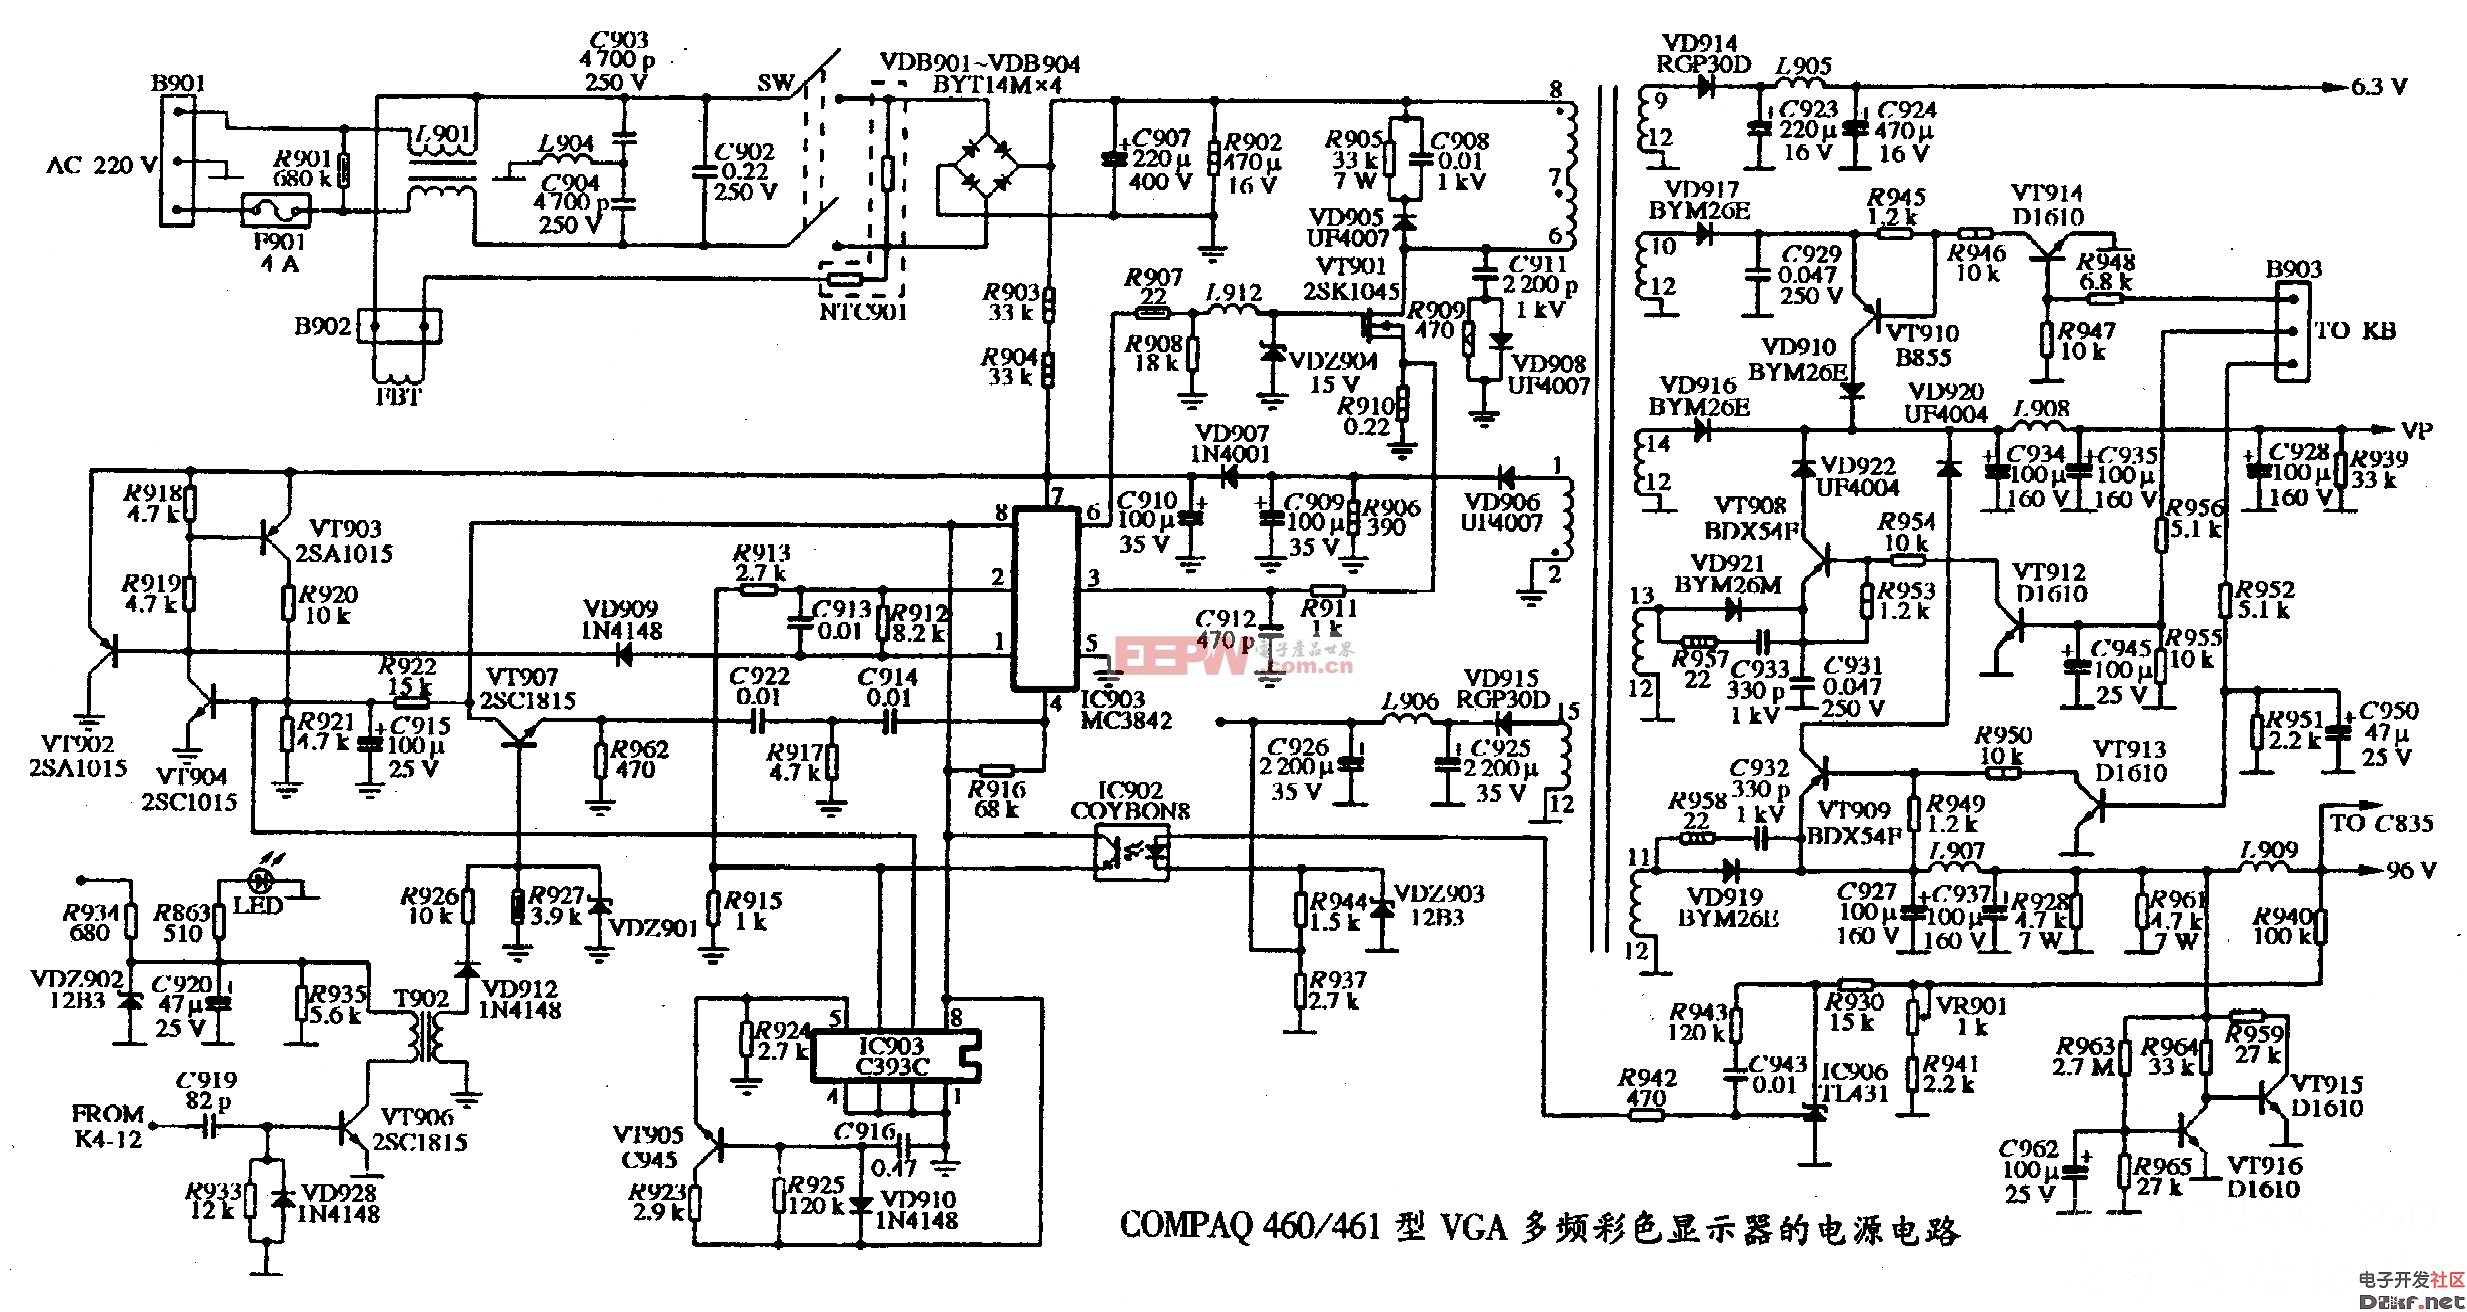 COMPAQ 460/461型VGA多频彩色显示器的电源电路图